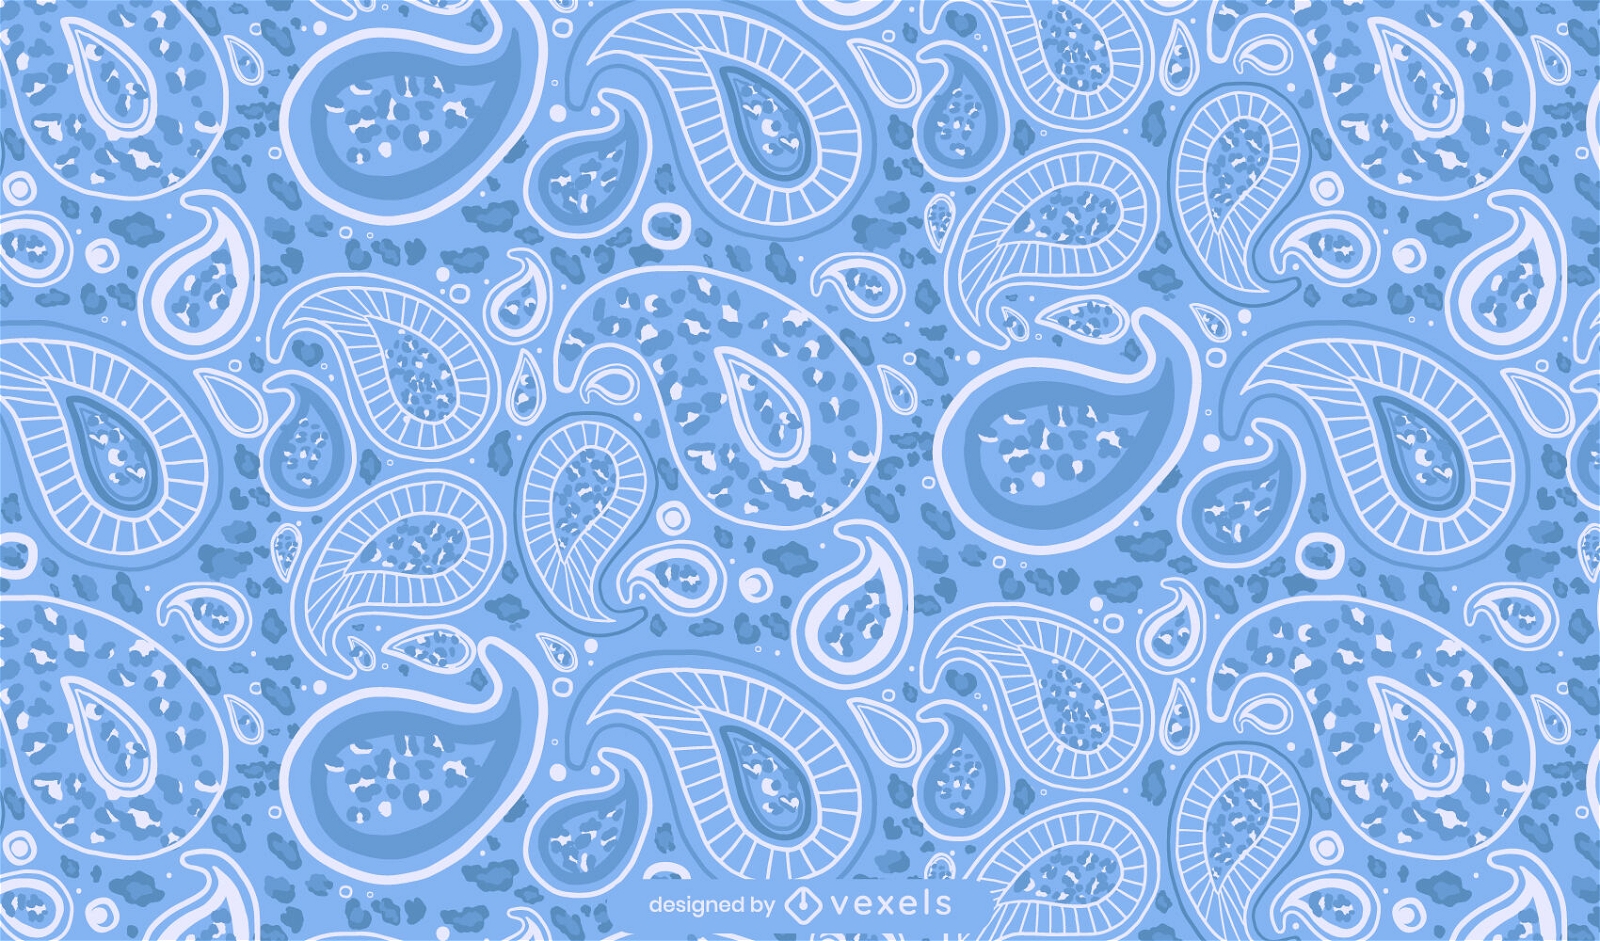 Leopard paisley blue seamless pattern